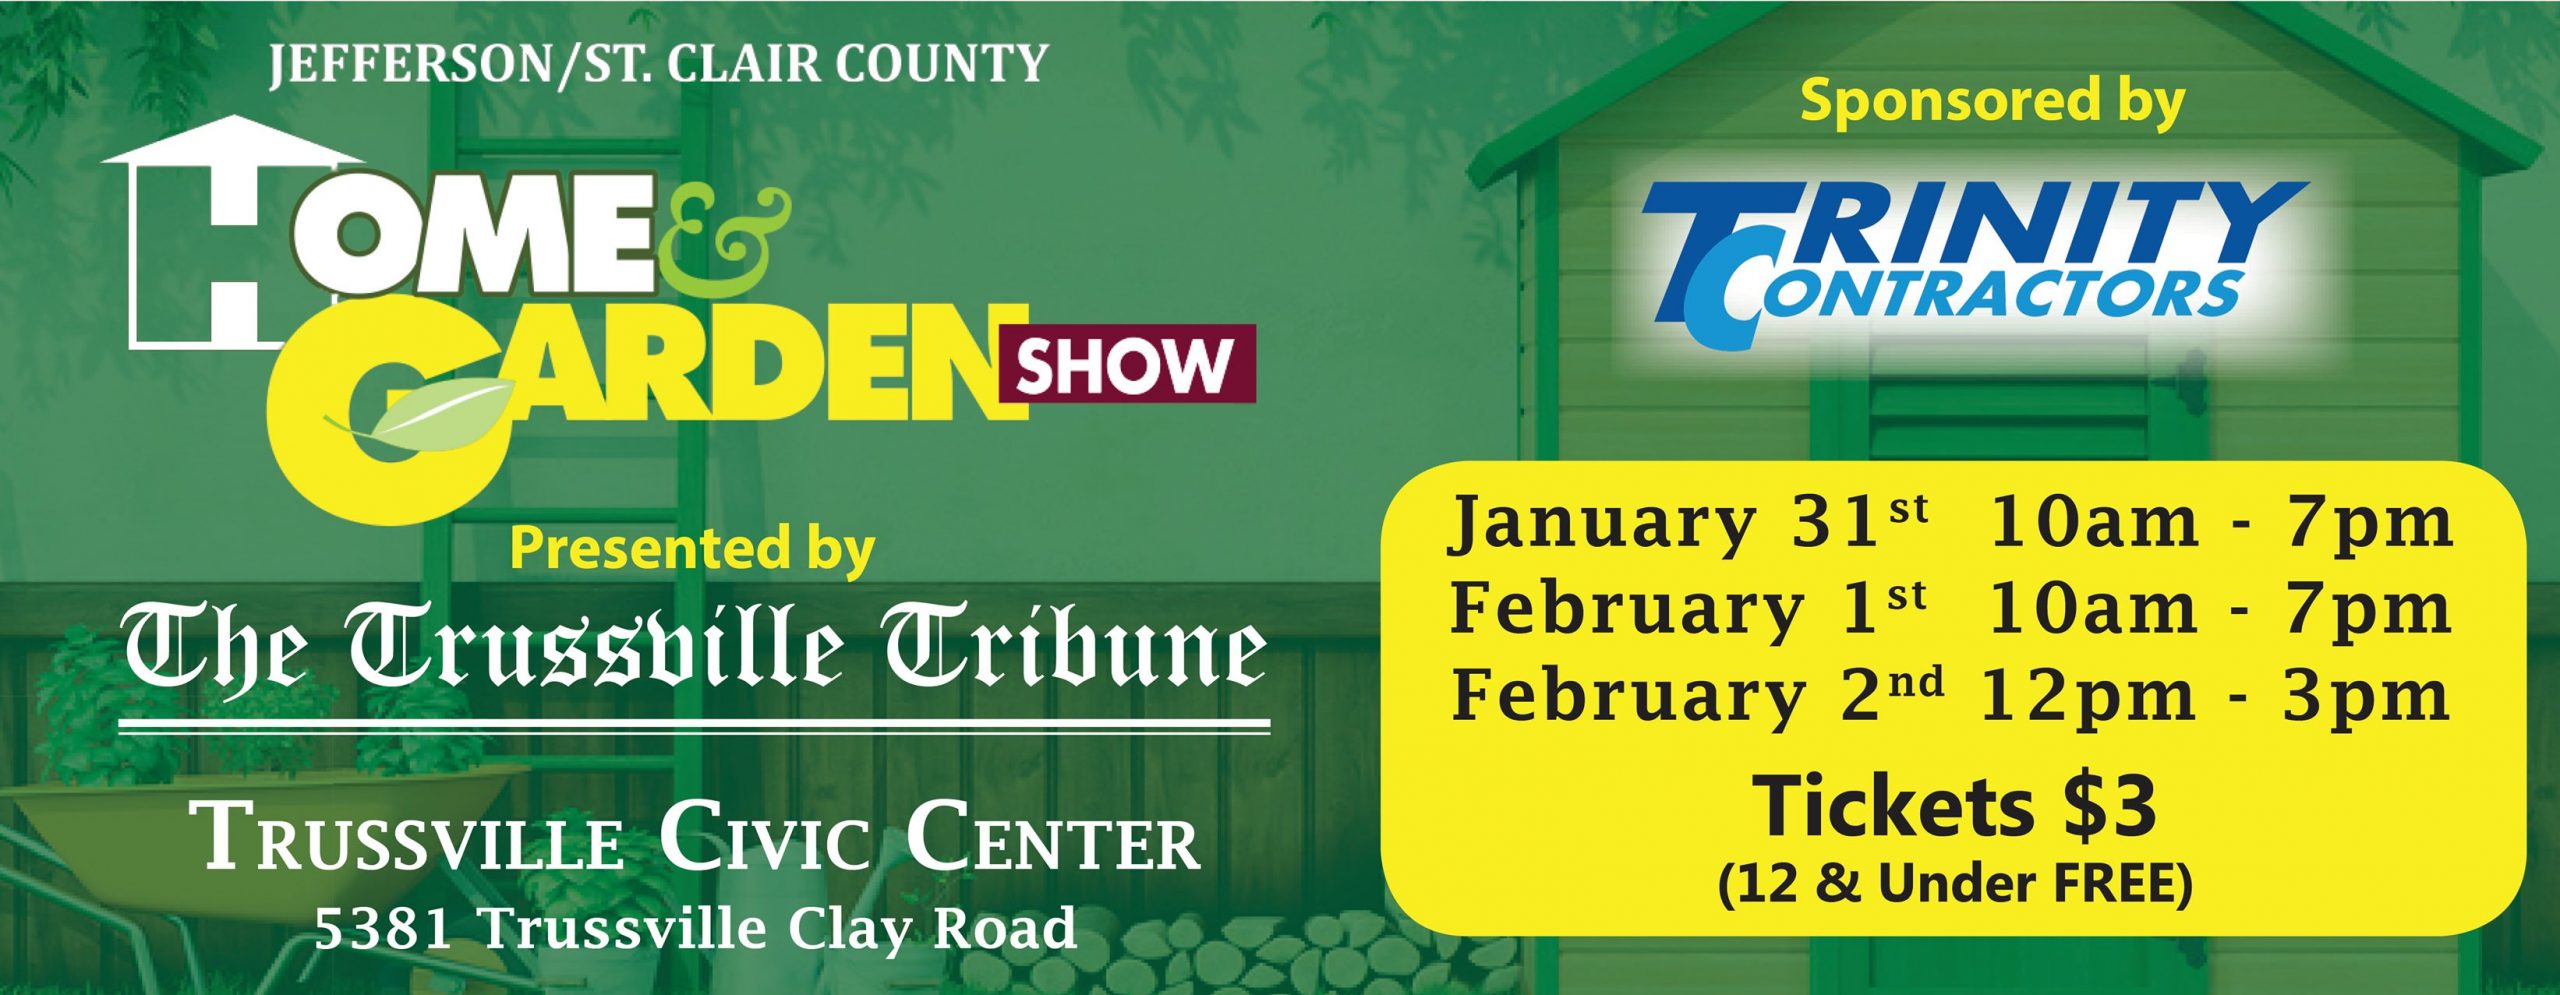 Jefferson/St. Clair Home & Garden Show 2020 dates announced